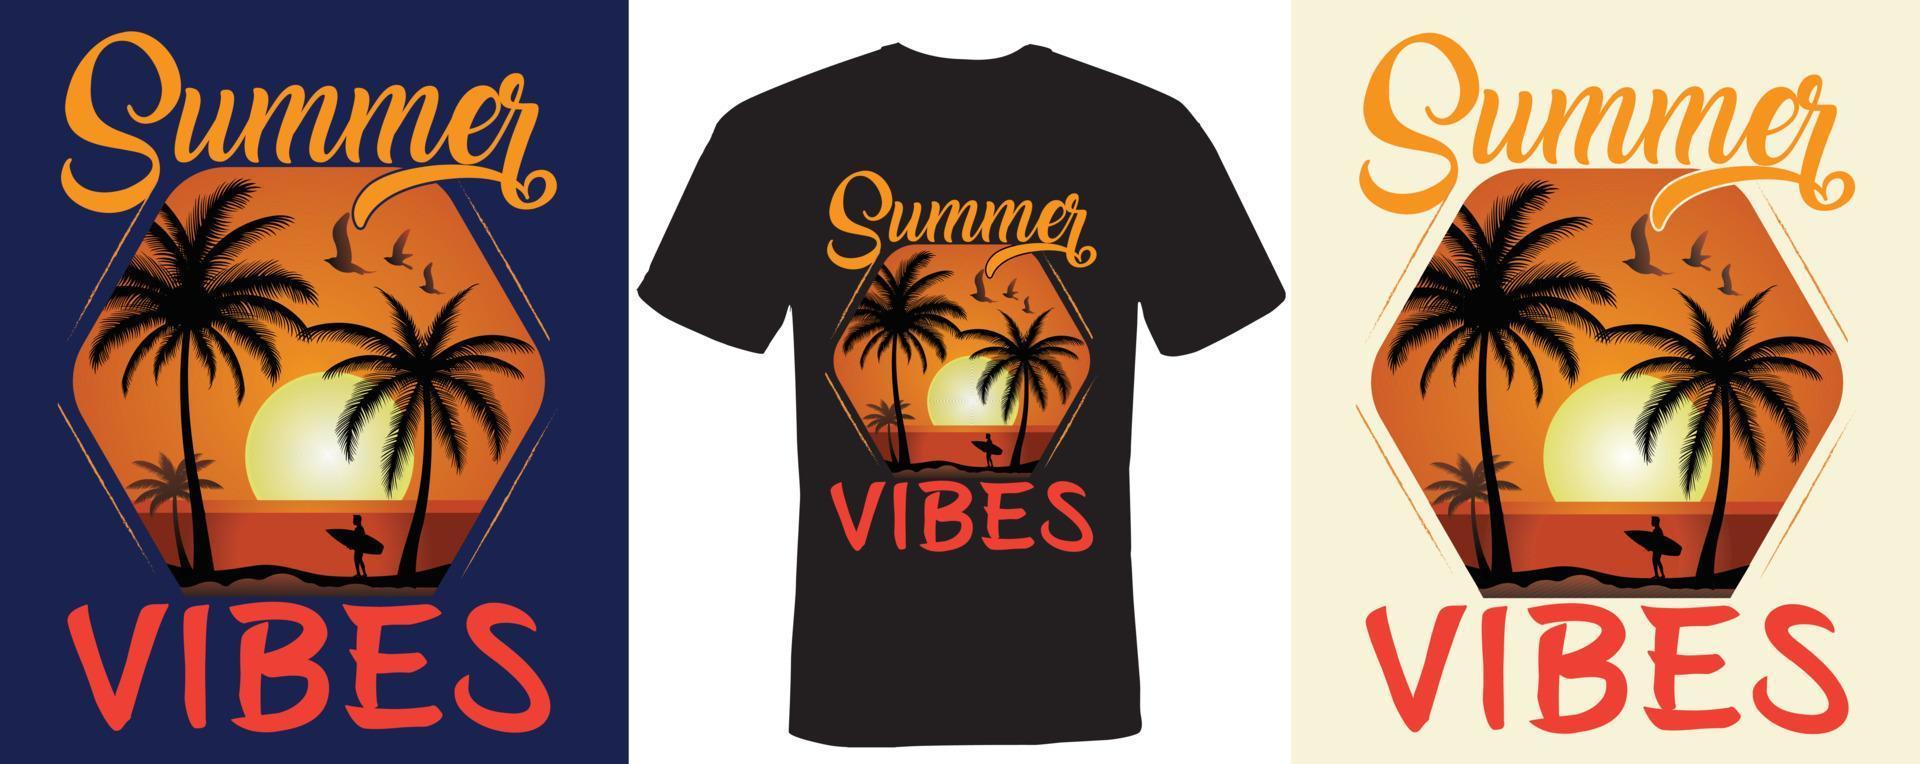 Summer vibes T-shirt design for summer vector